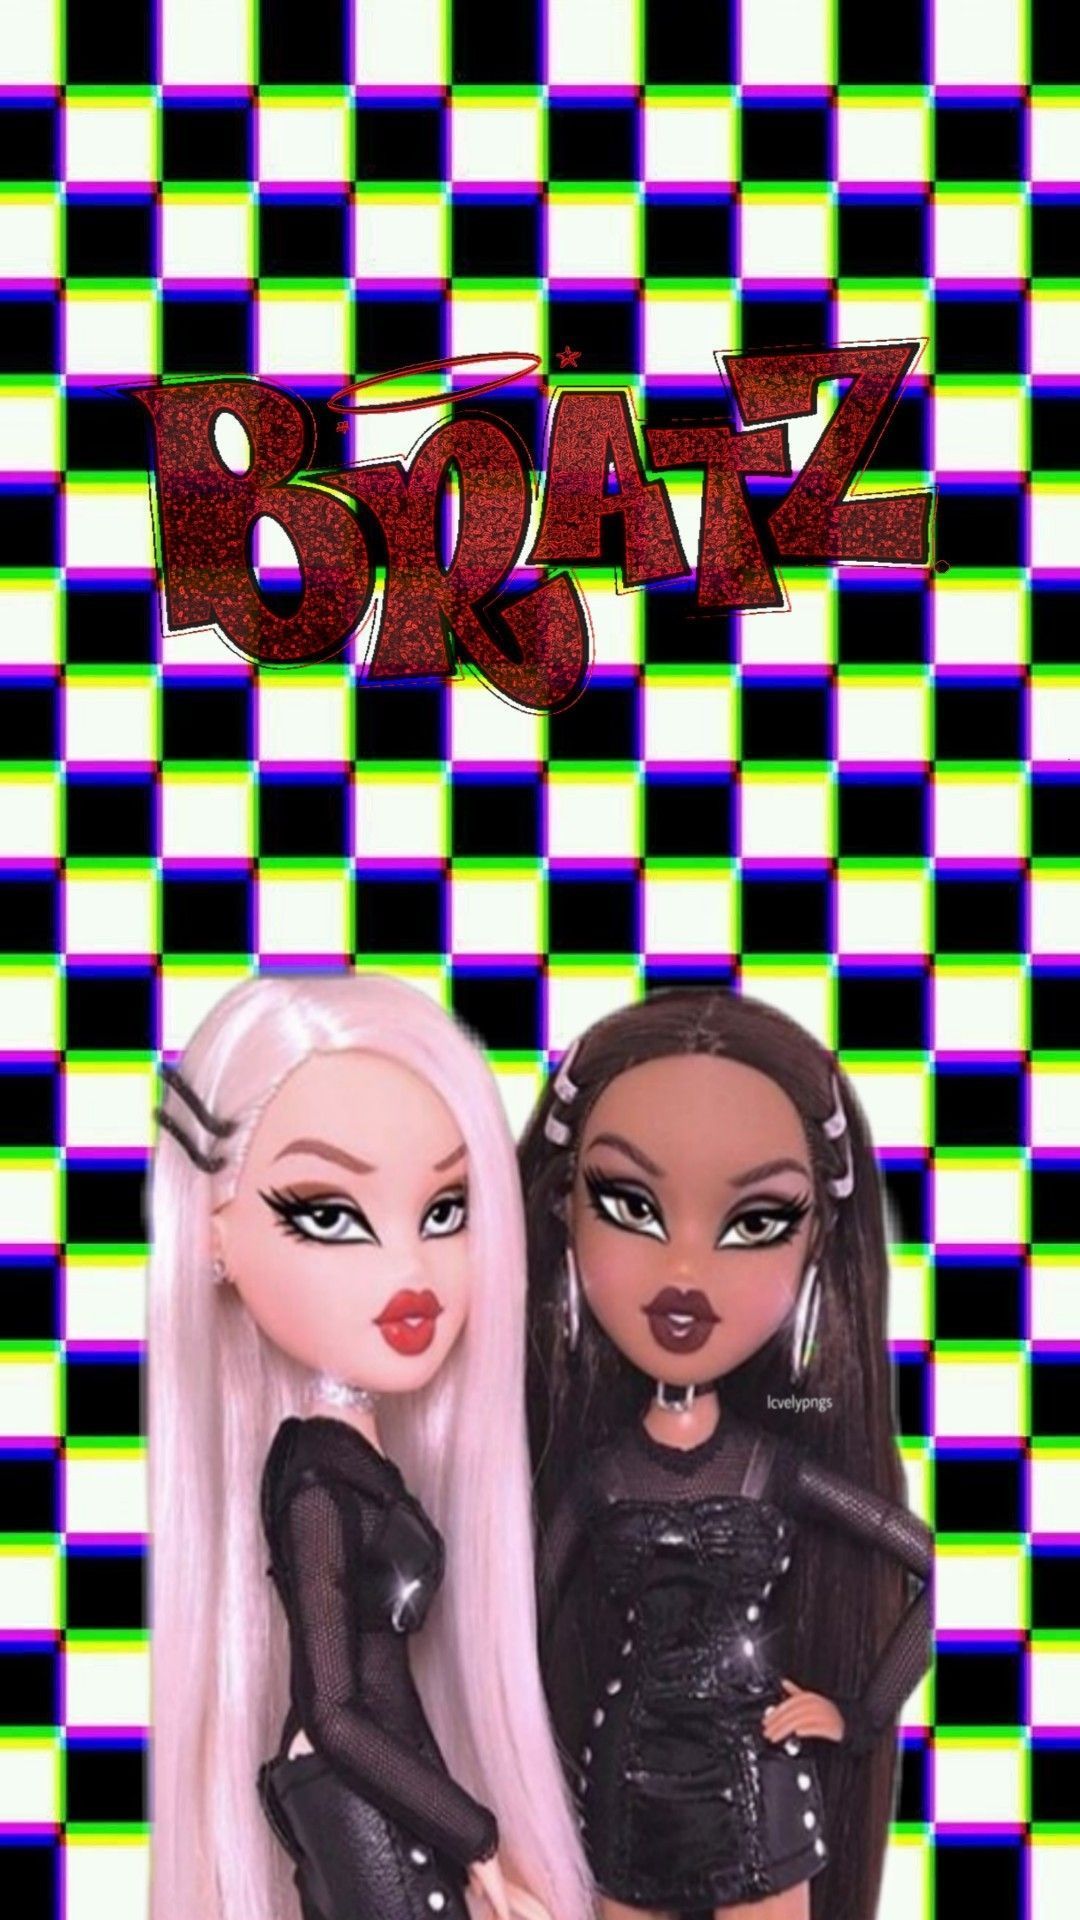 IPhone wallpaper of my favorite Bratz dolls, Yasmin and Cloe - Bratz